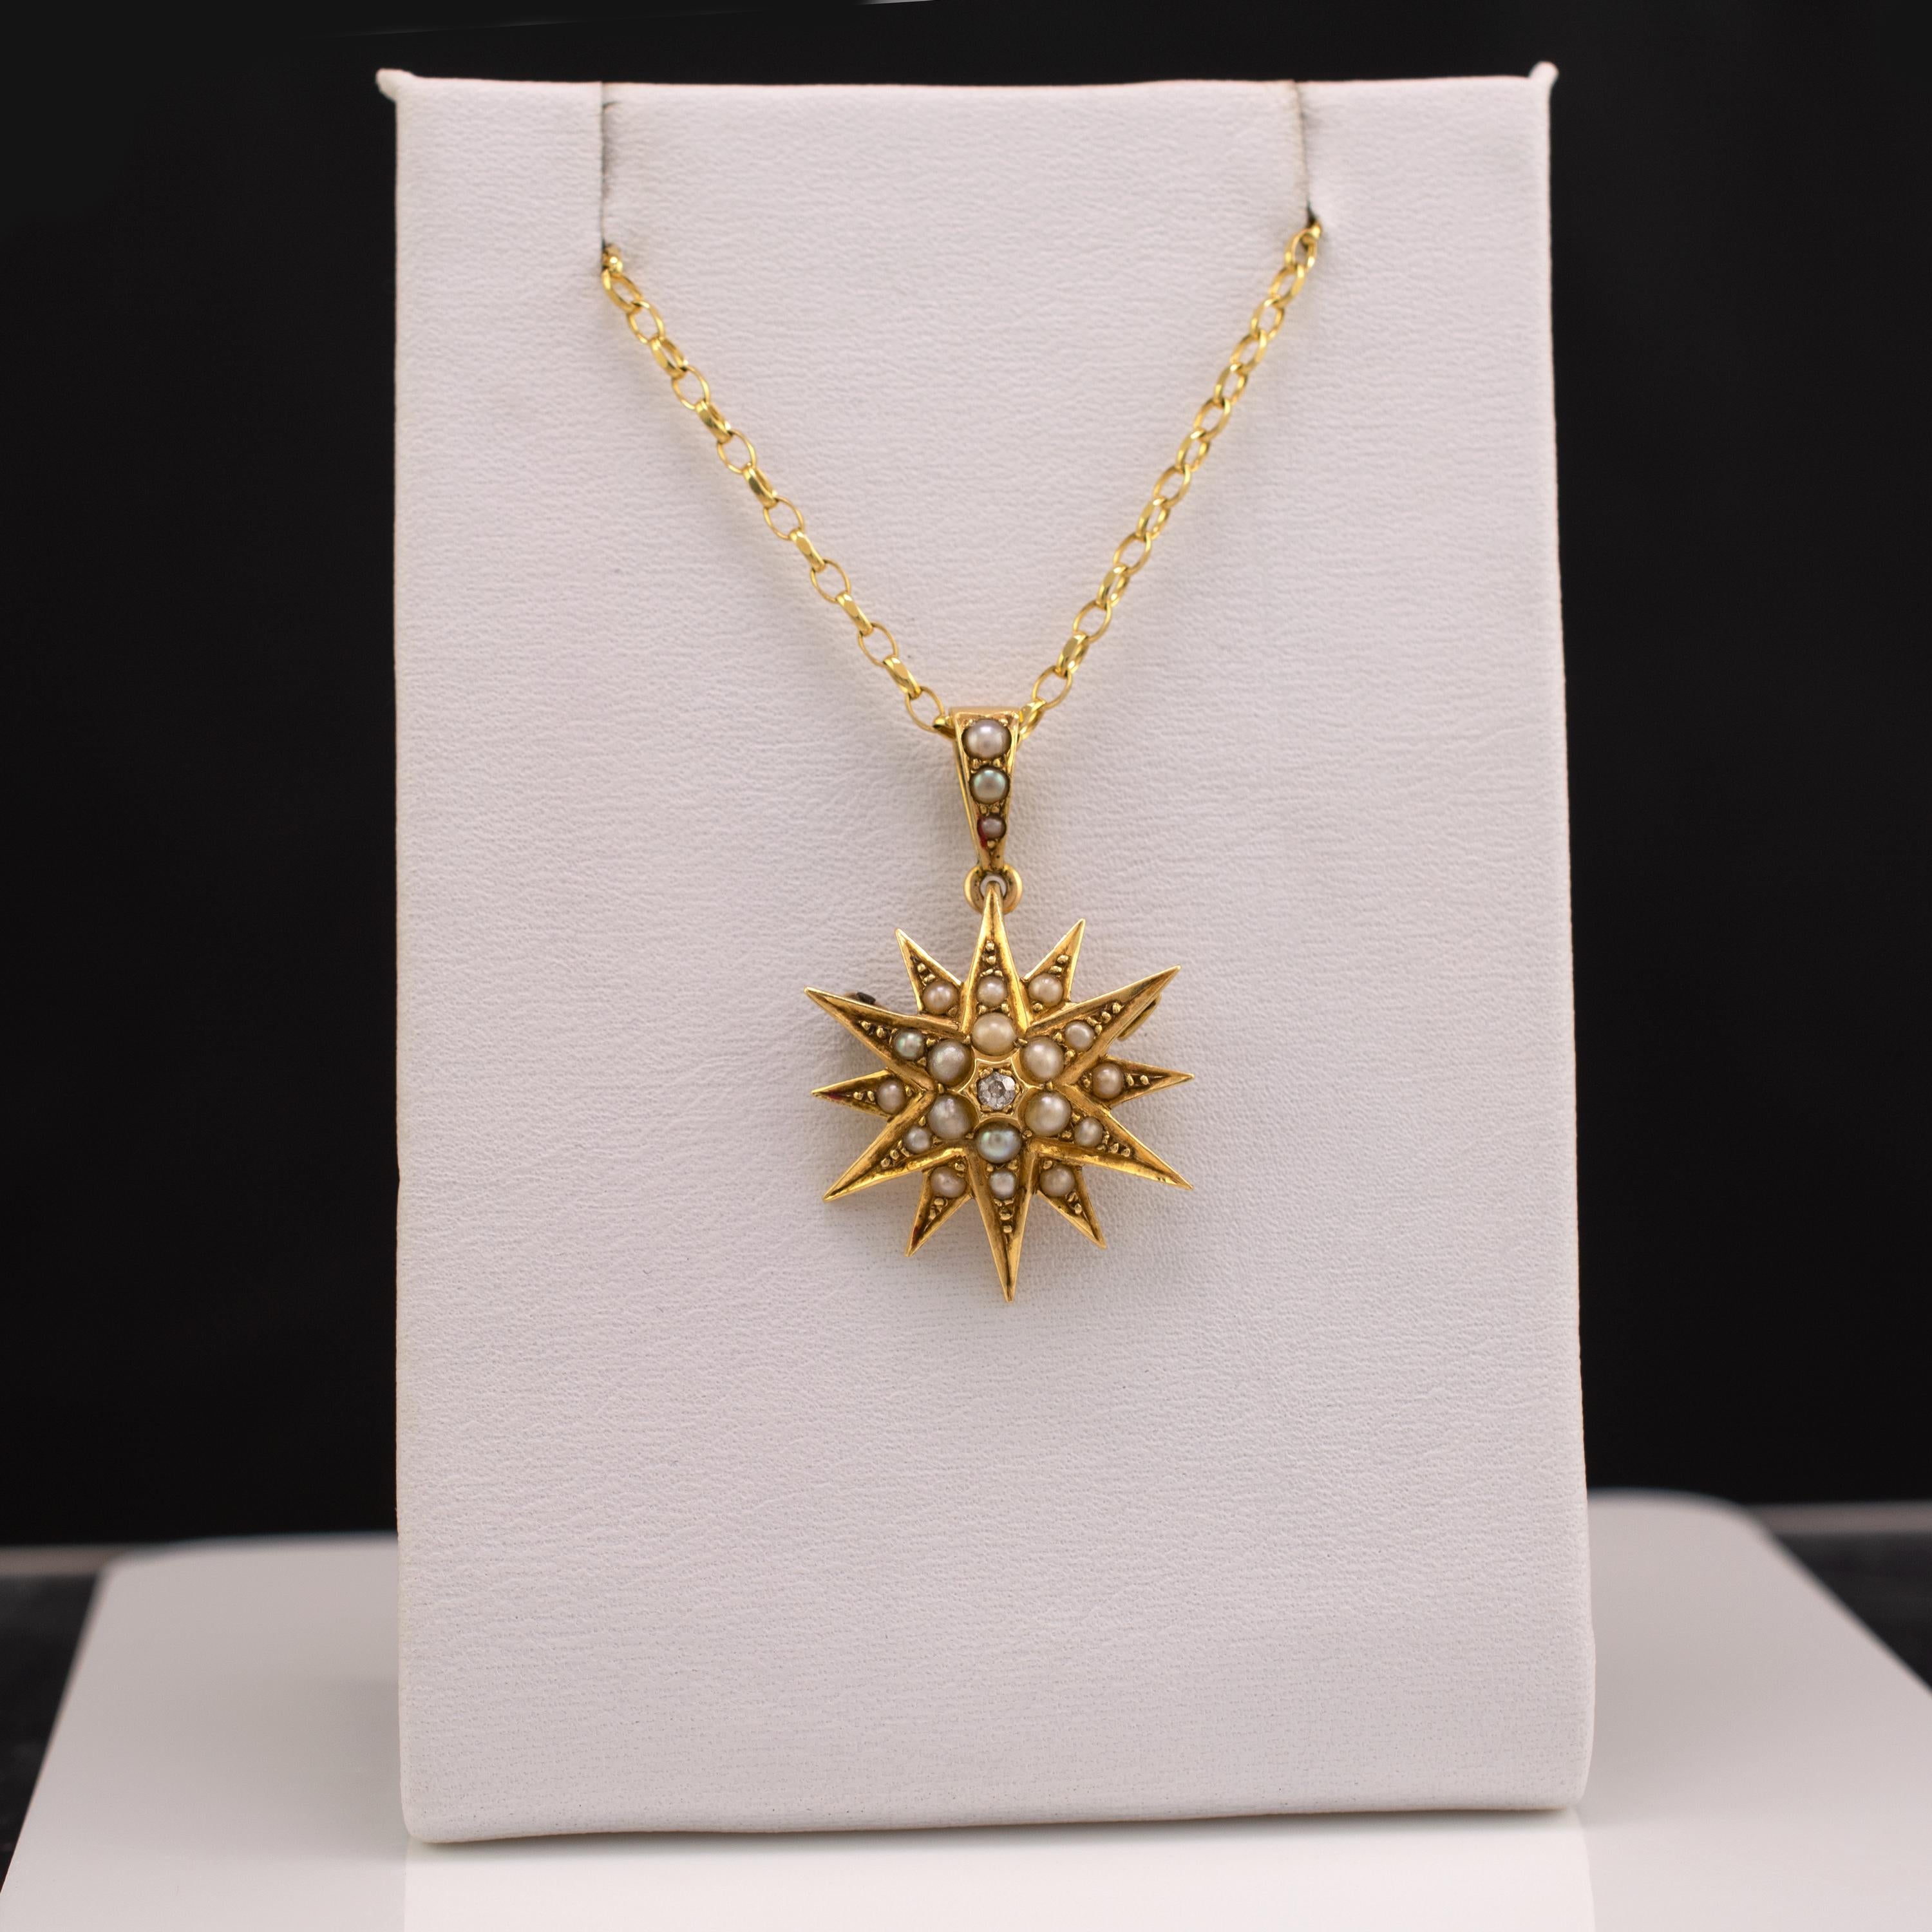 Rose Cut 18 Karat Pearl Diamond Star Pendant Brooch with 18 Karat Gold Chain, circa 1900